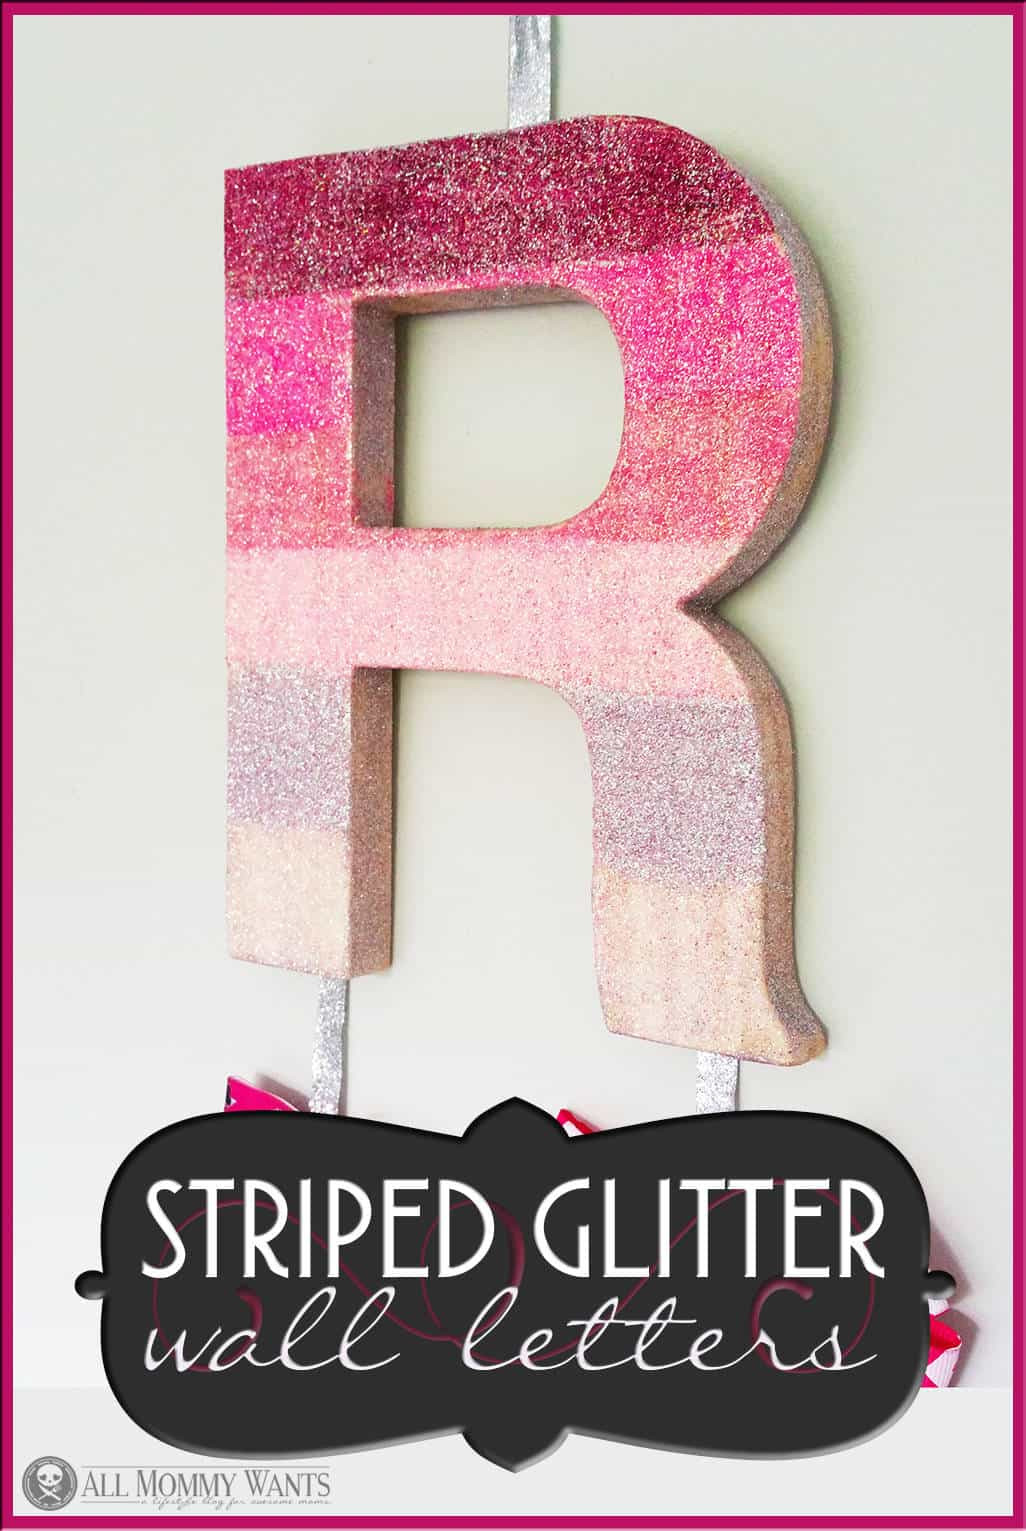 DIY Glitter Wooden Letters
 DIY Striped Glitter Letters Wall Decor